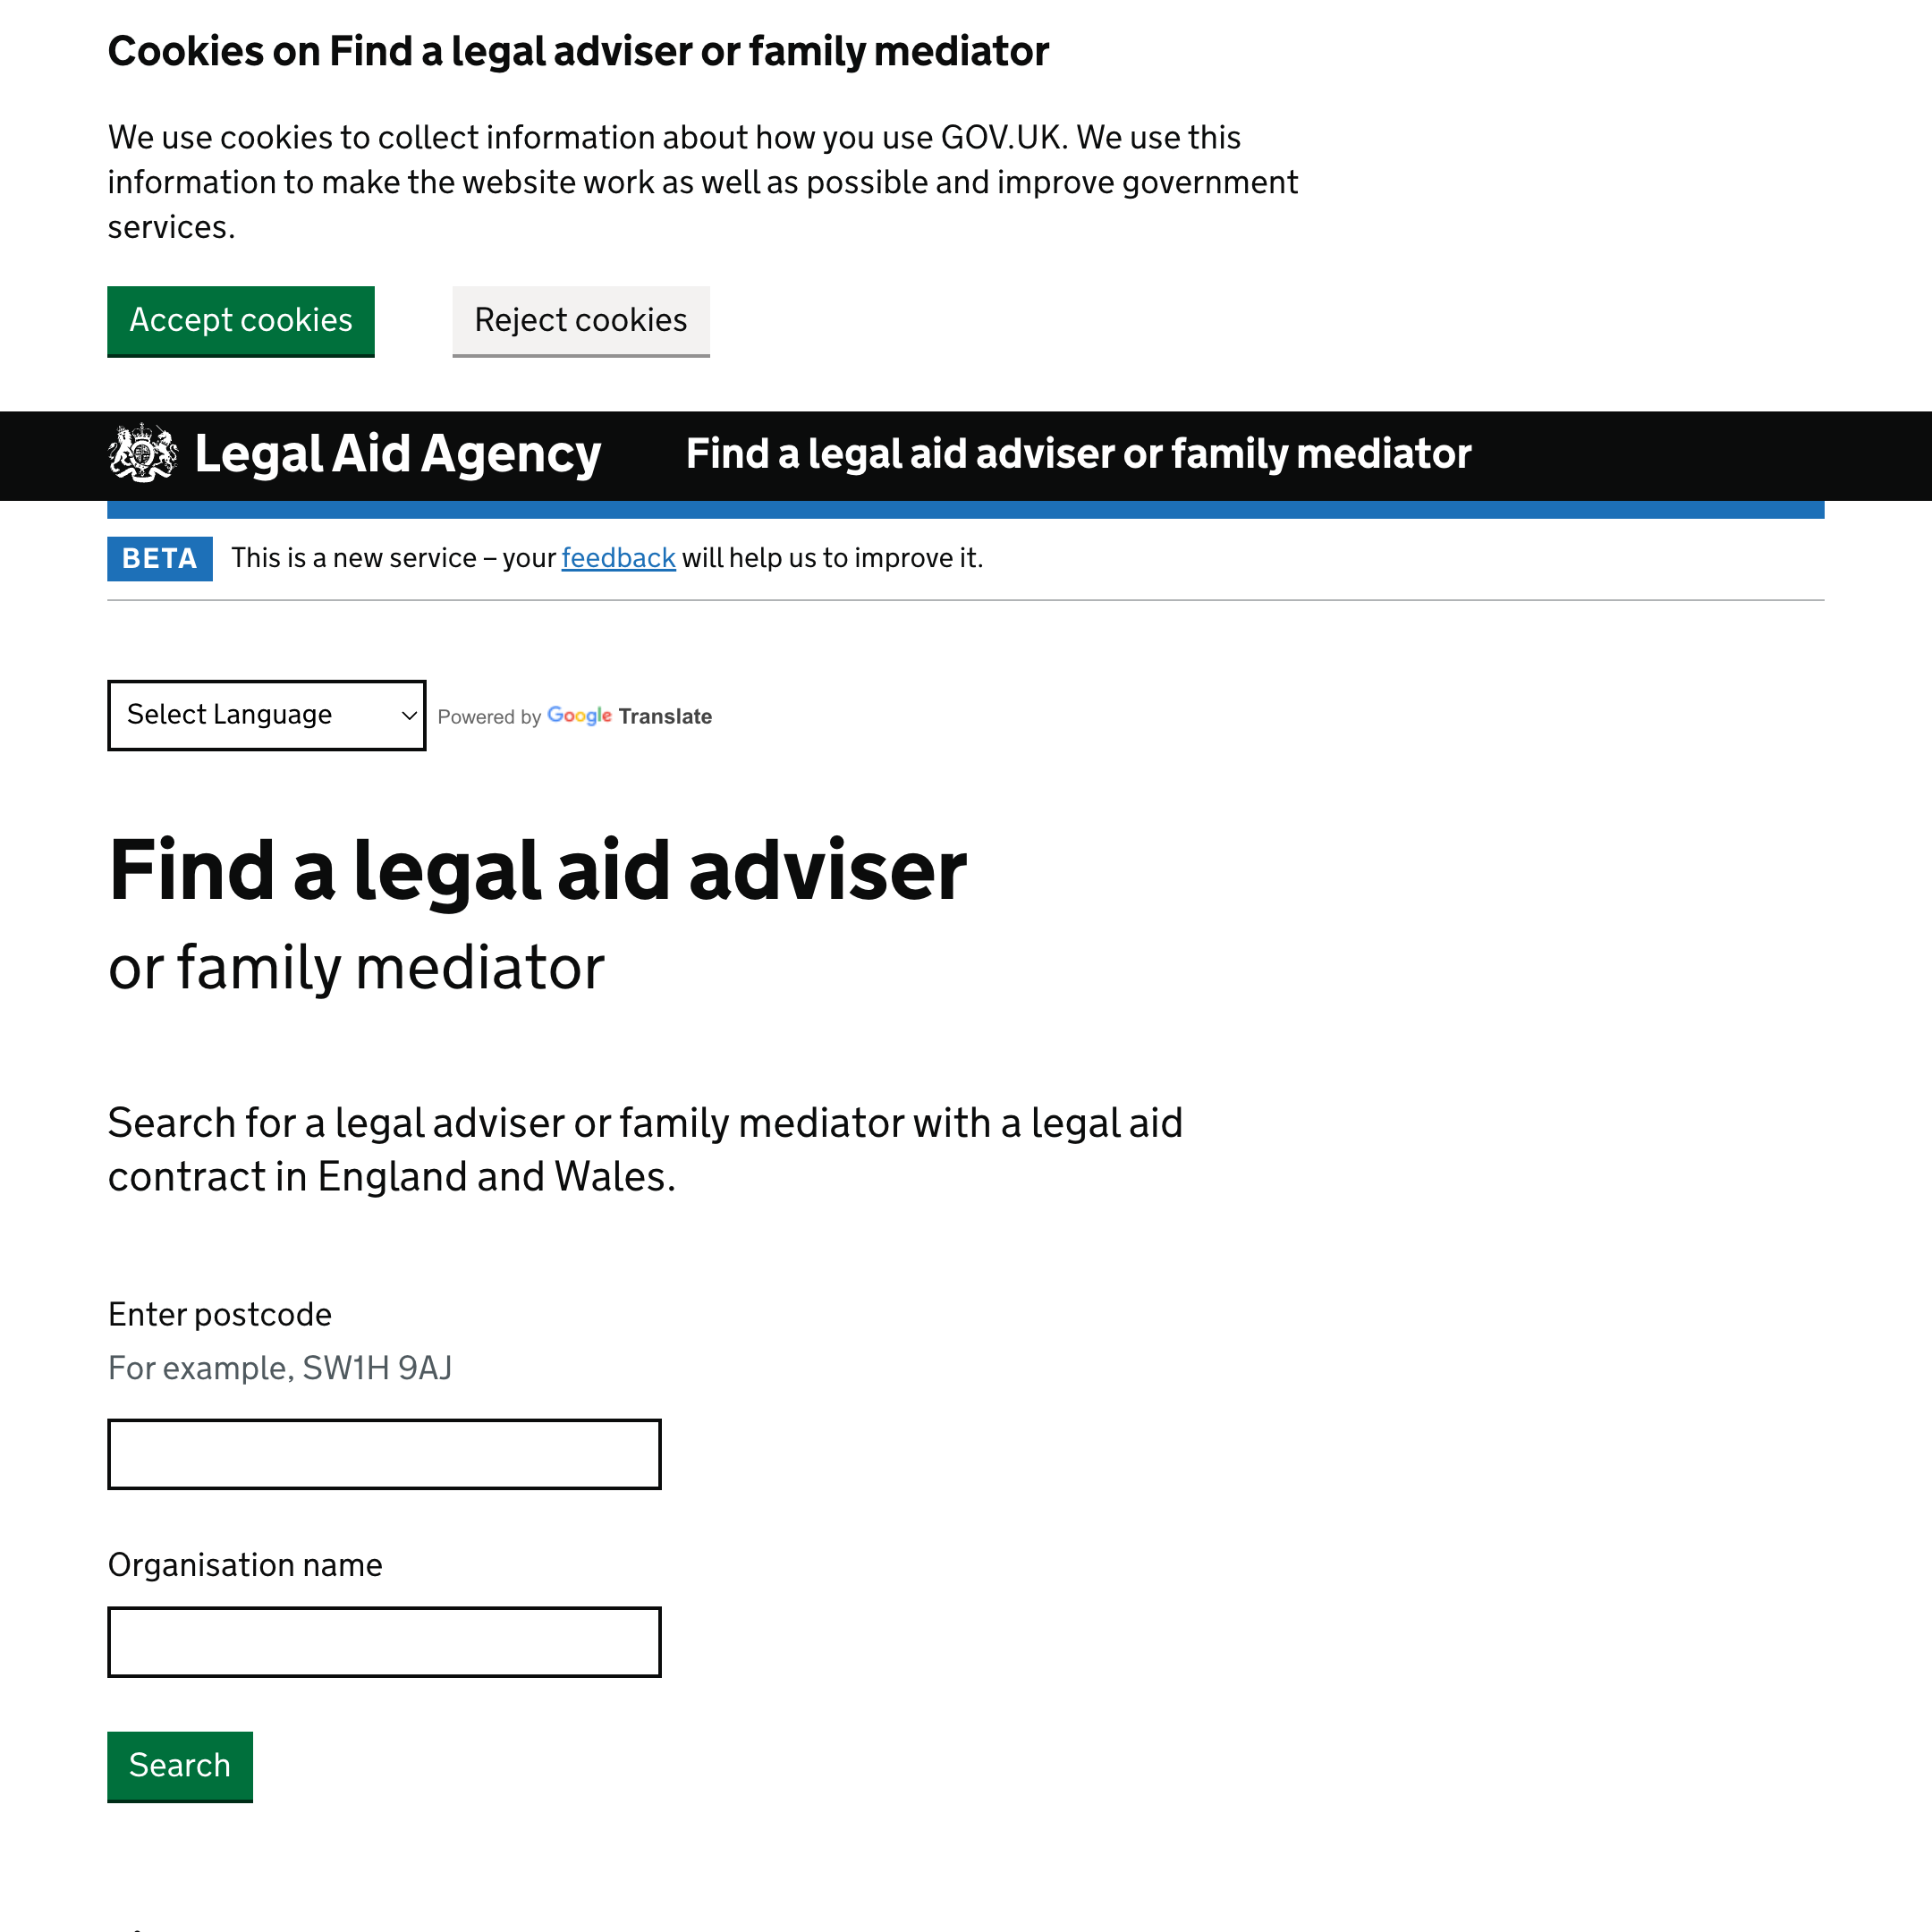 Find a legal aid adviser or family mediator